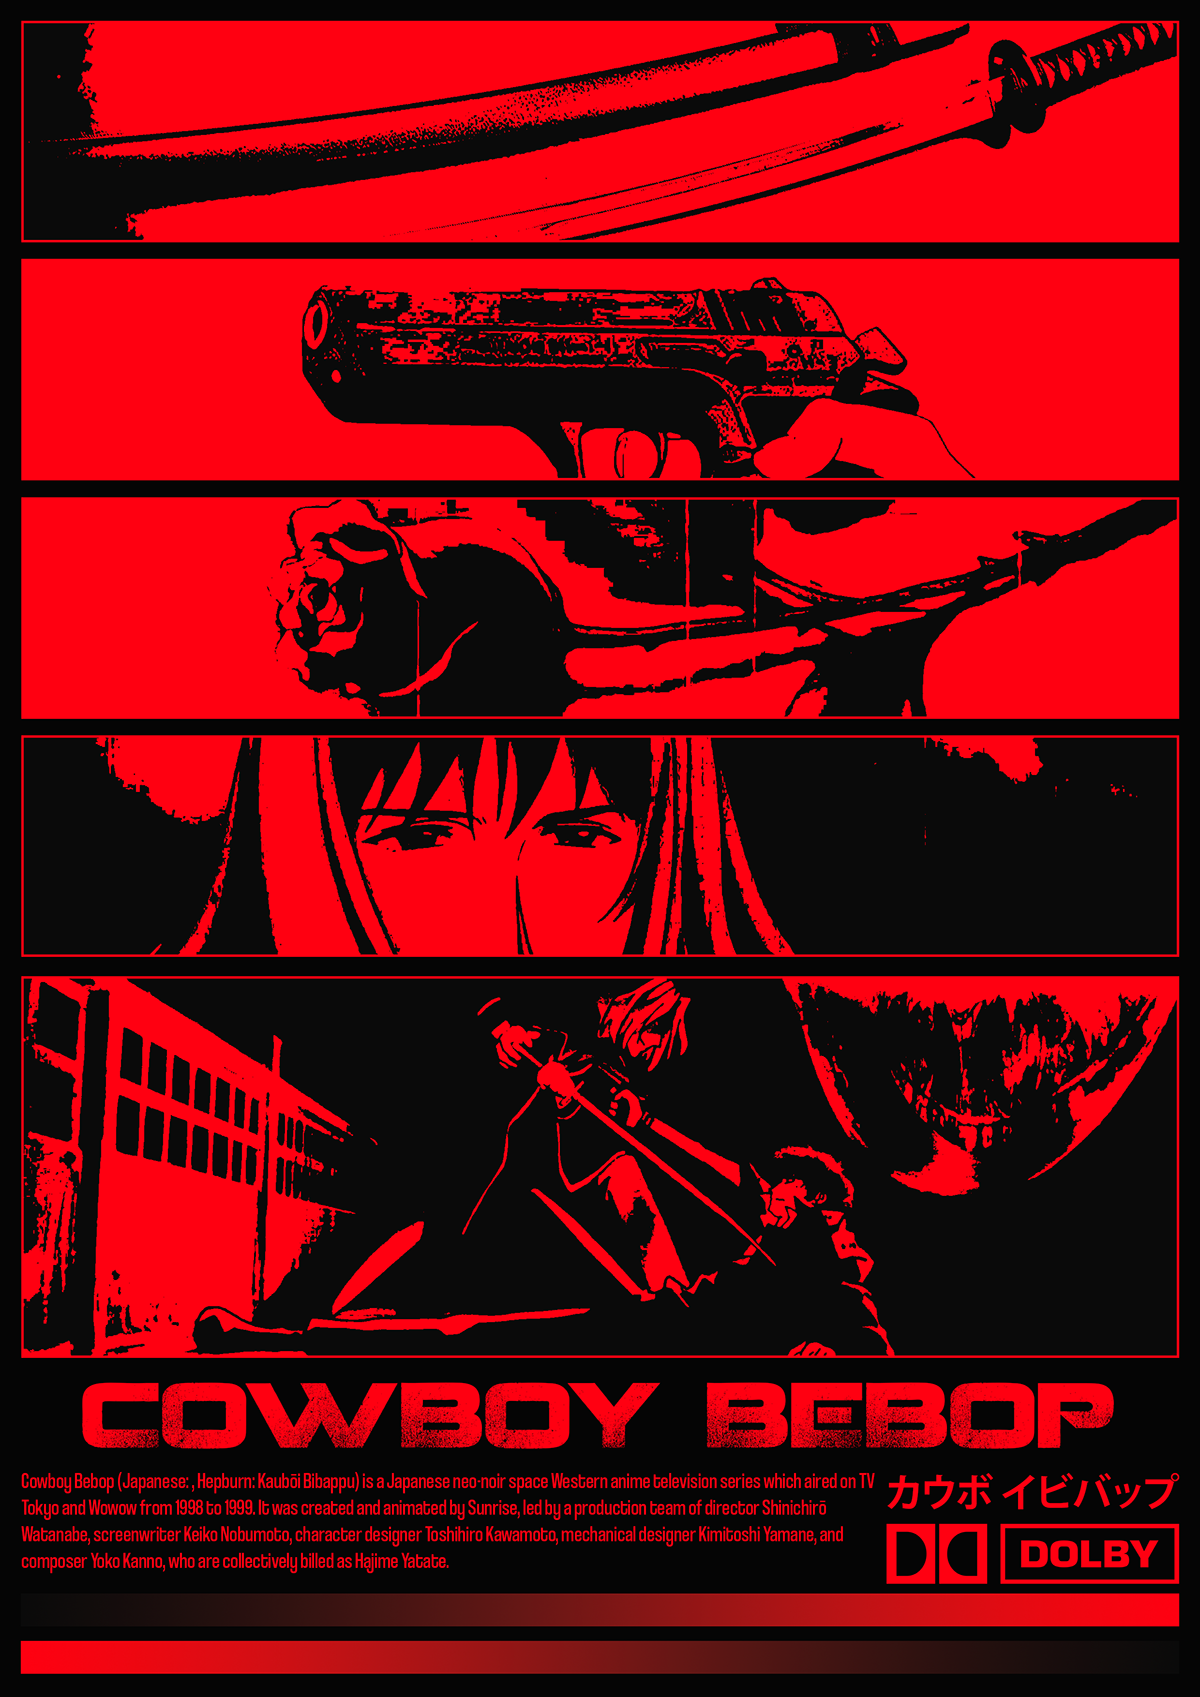 CowboyBebop anime anime art manga Character design  comic cartoon digital illustration concept art graphic design 